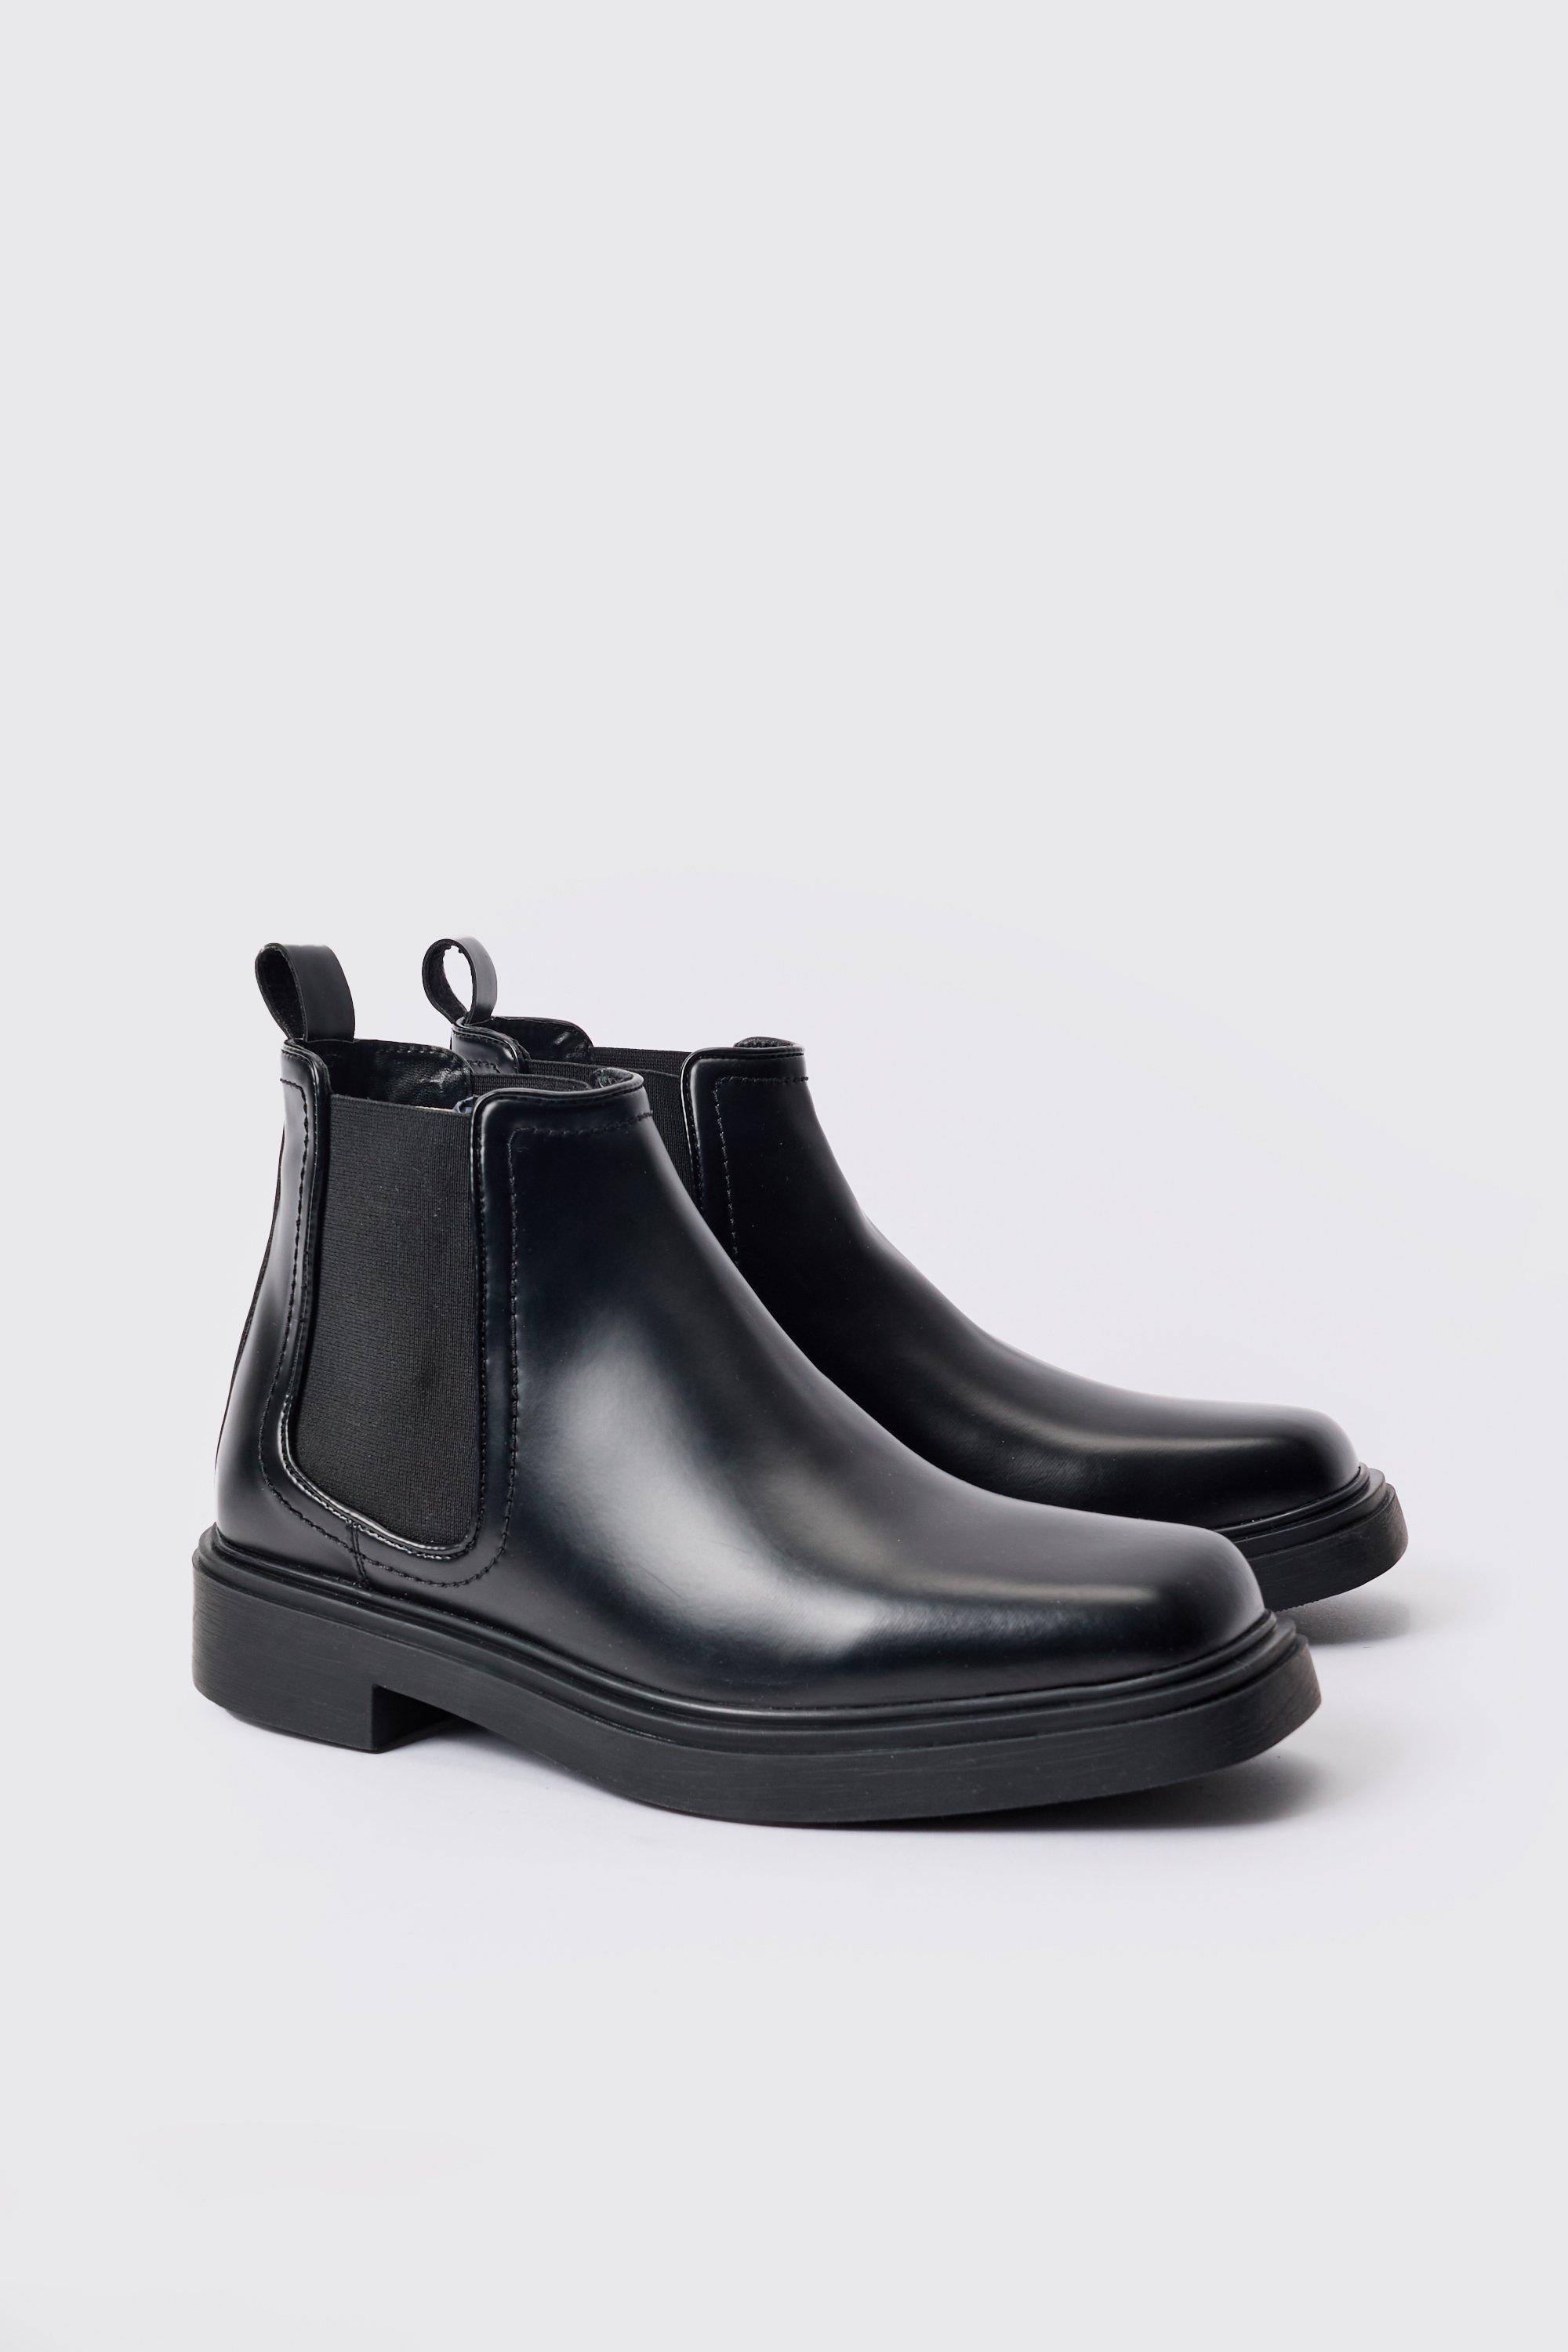 Image of Pu Square Toe Chelsea Boot In Black, Nero